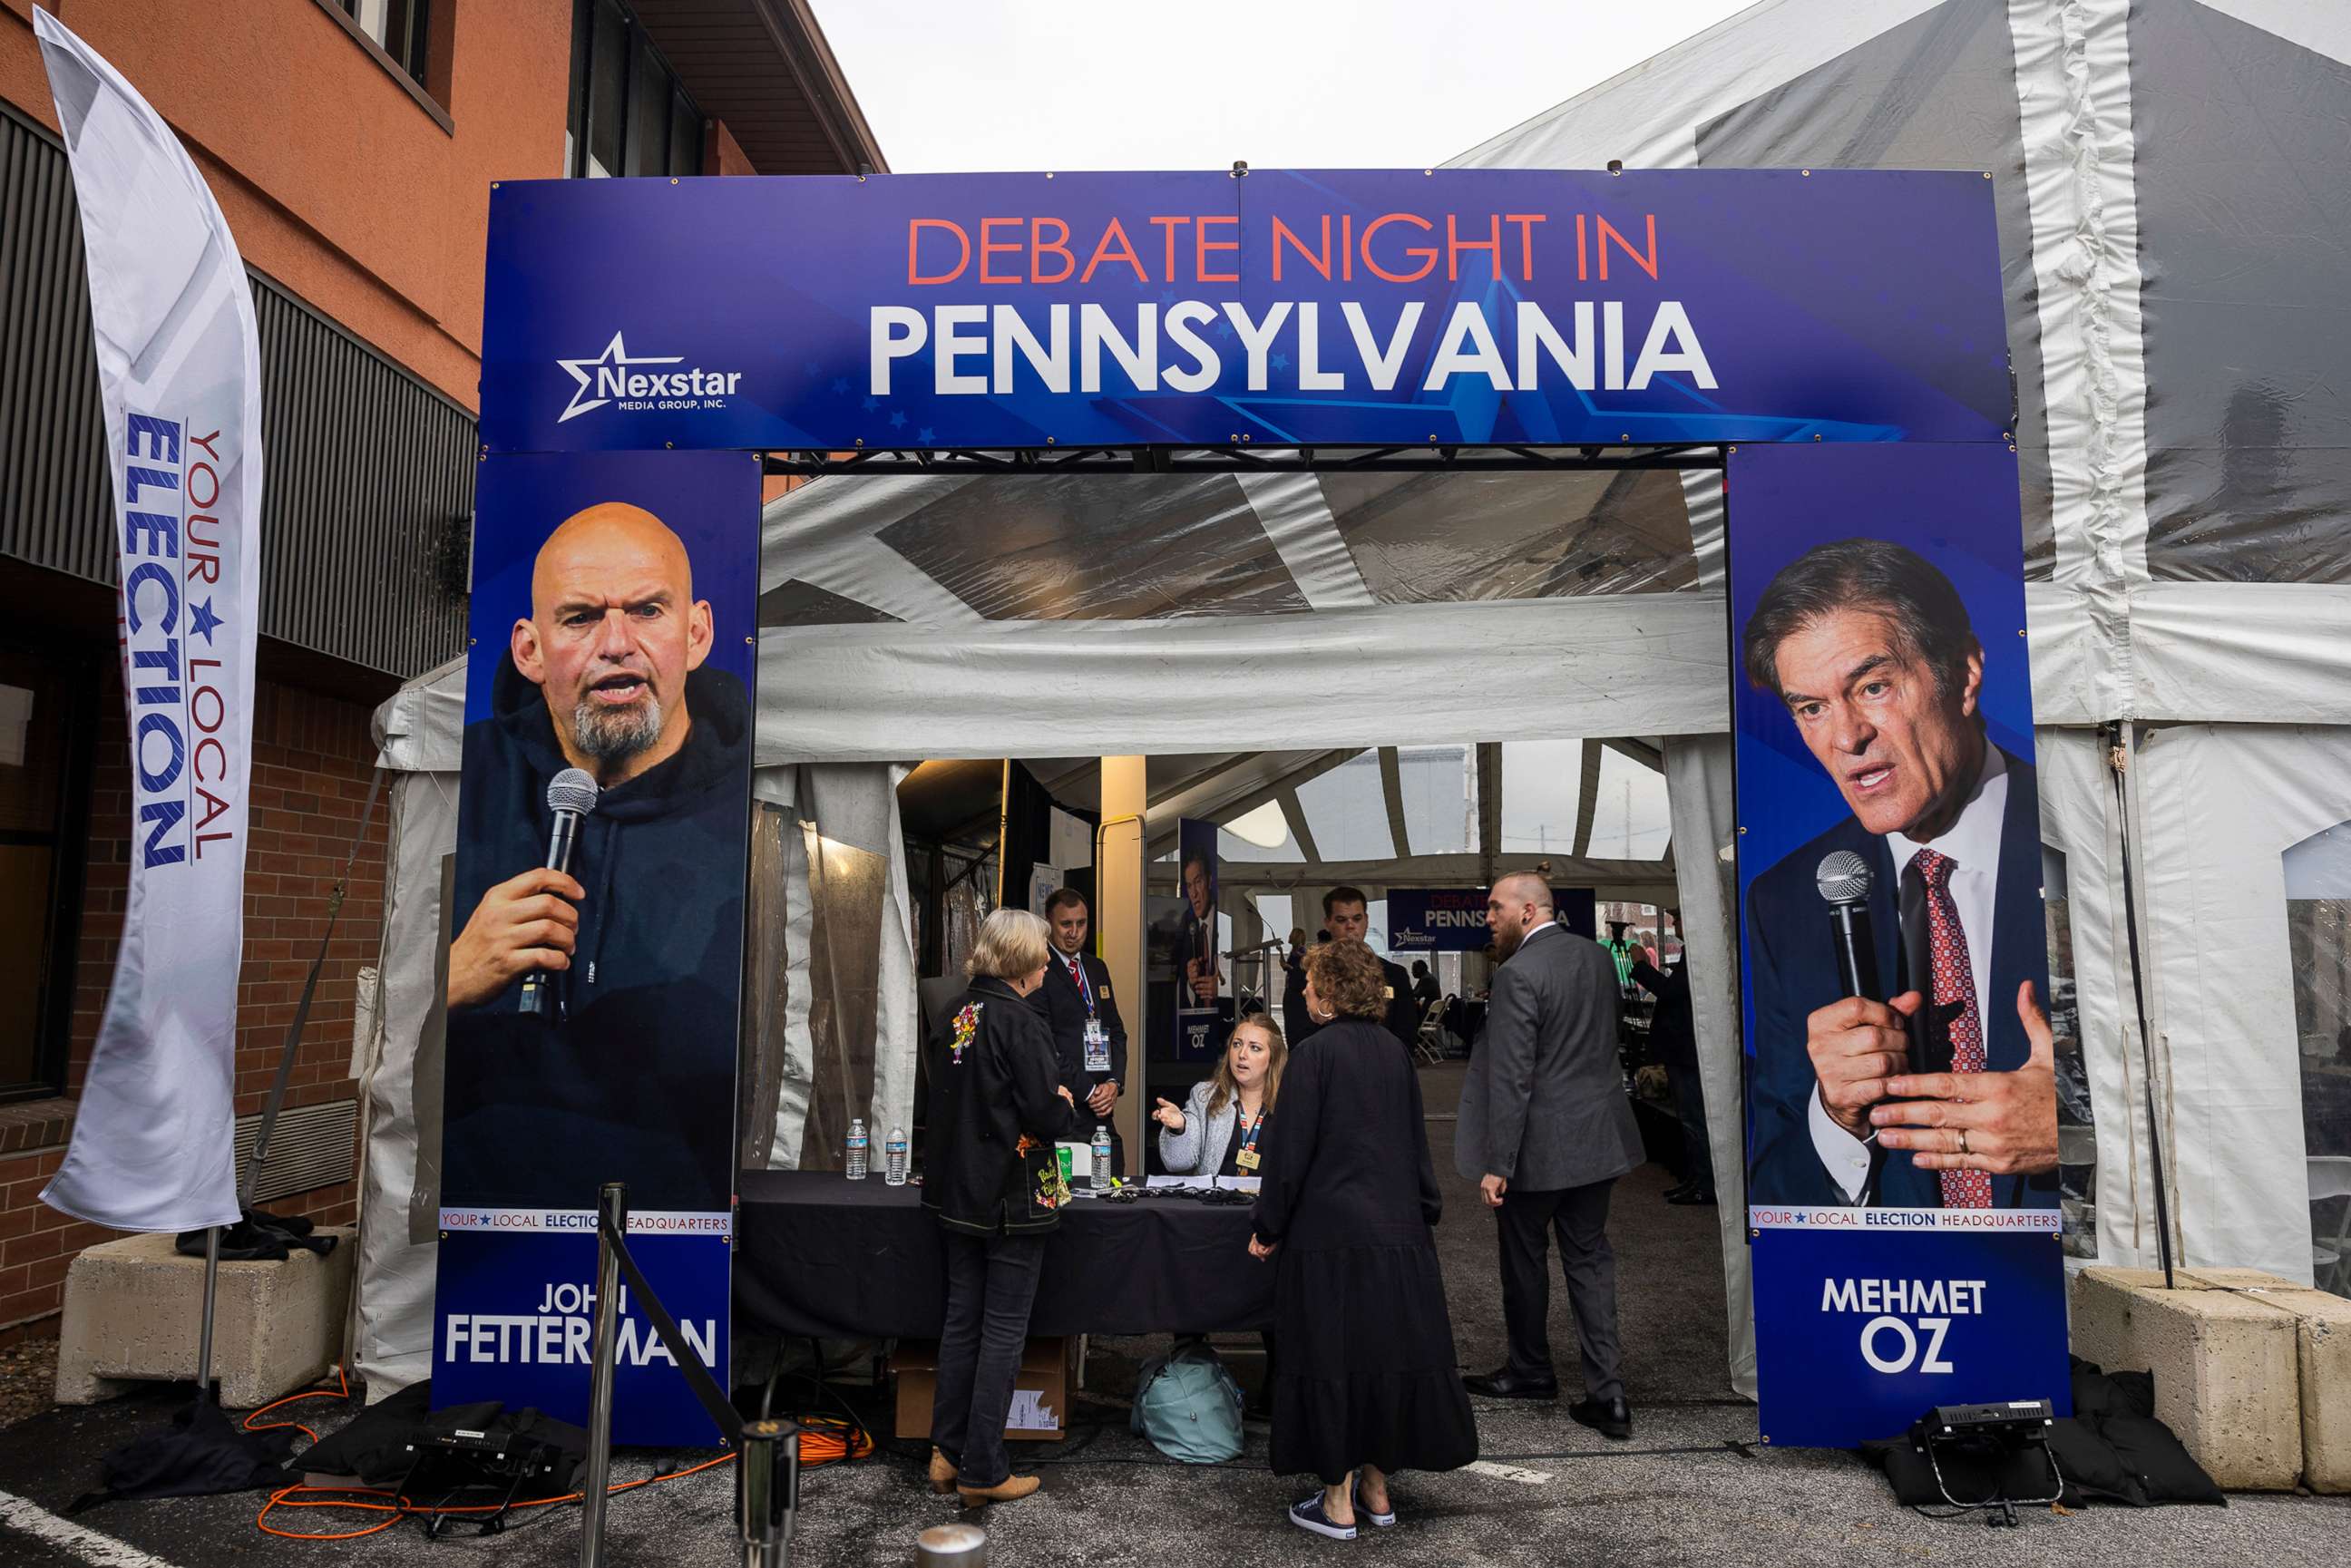 PHOTO: Members of the media prepare to cover the Pennsylvania Senate debate between Democratic candidate John Fetterman and Republican candidate Mehmet Oz in Harrisburg, Penn., Oct. 25, 2022.